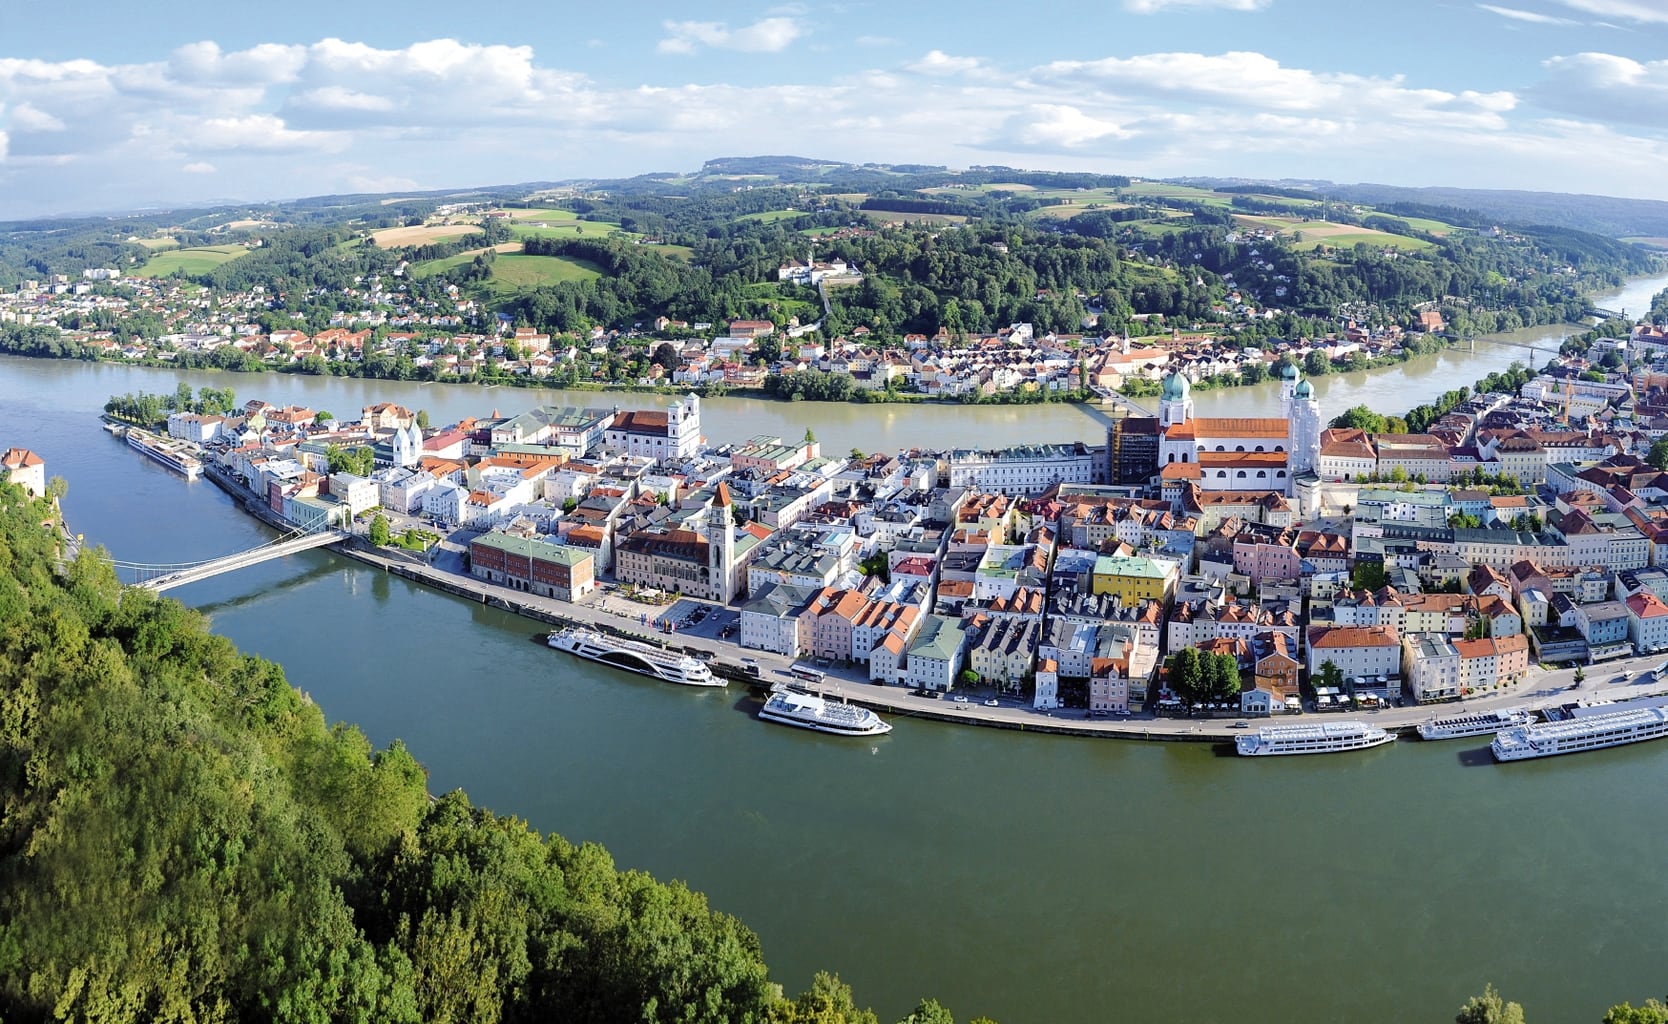 Panarama van de Beierse stad Passau vanuit de lucht